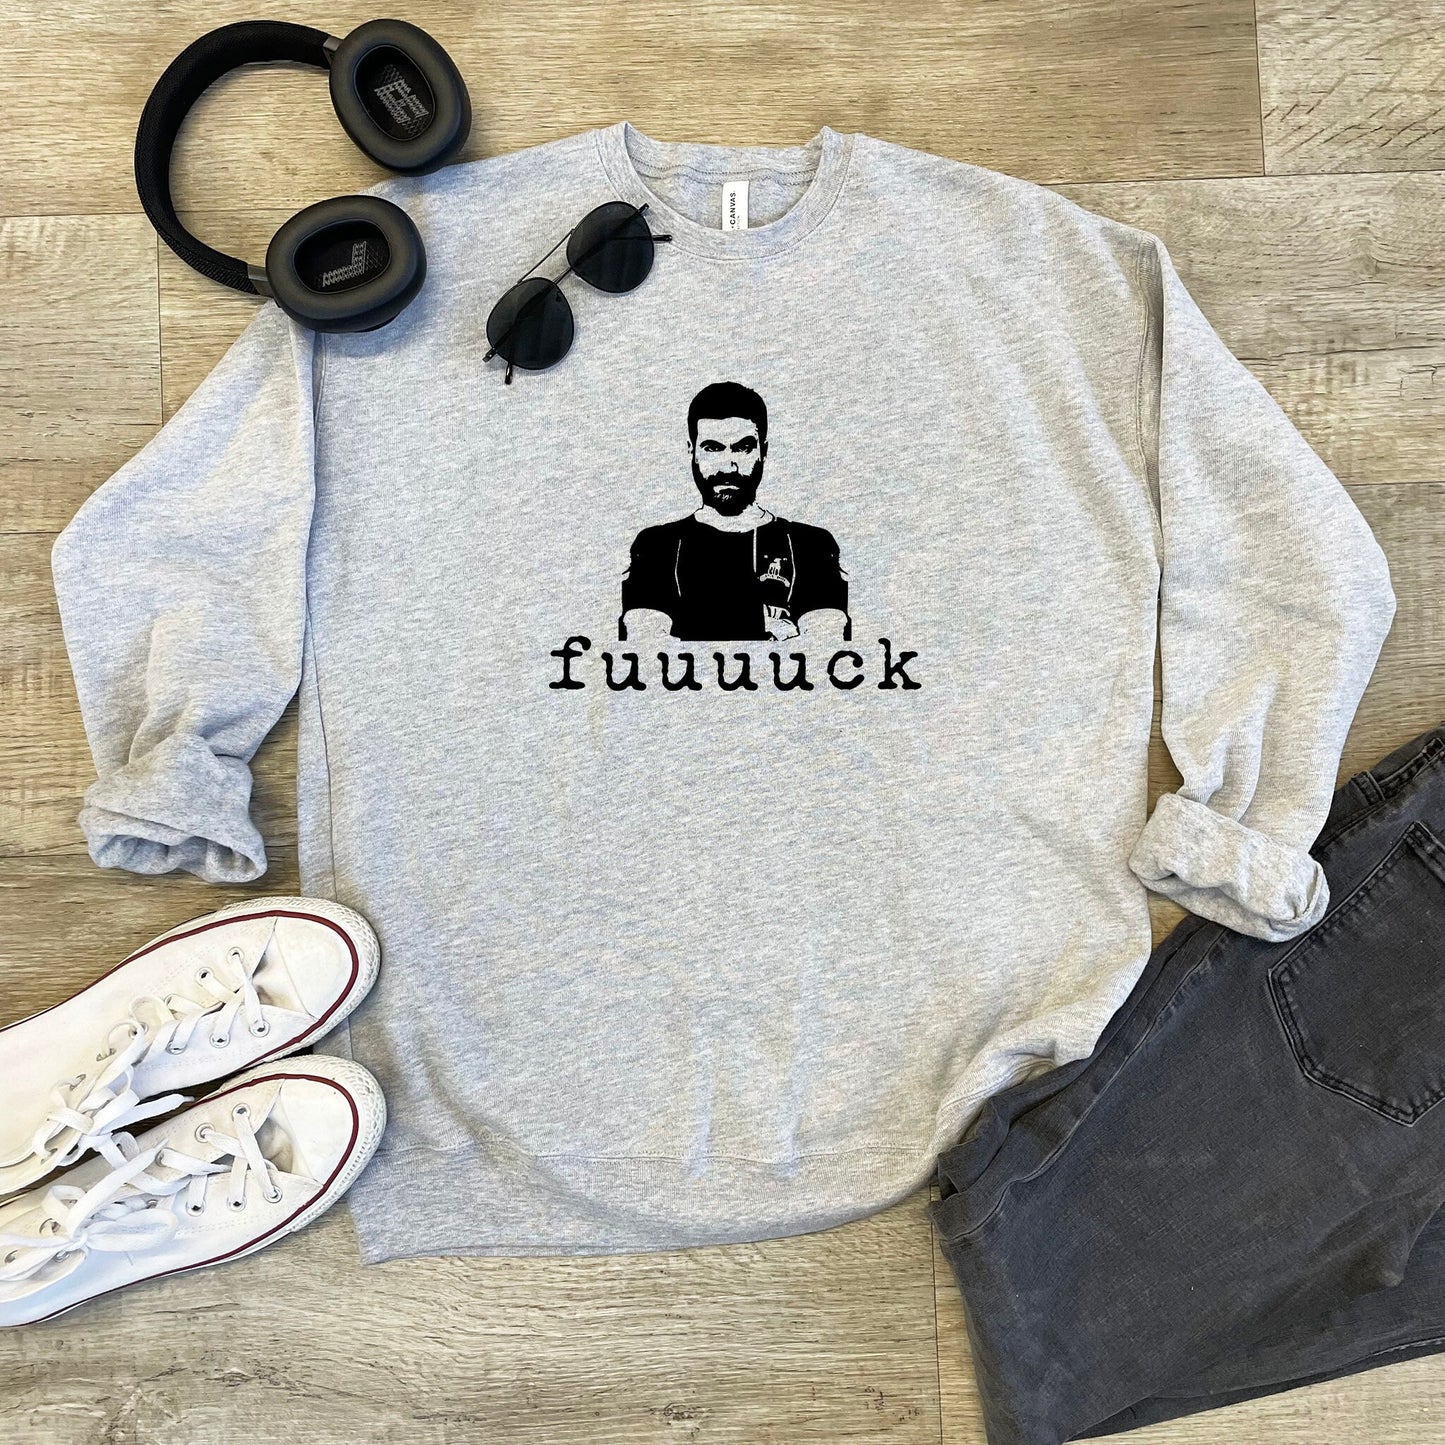 Fuuuuck (Roy Kent) - Unisex Sweatshirt - Dusty Blue or Athletic Heather